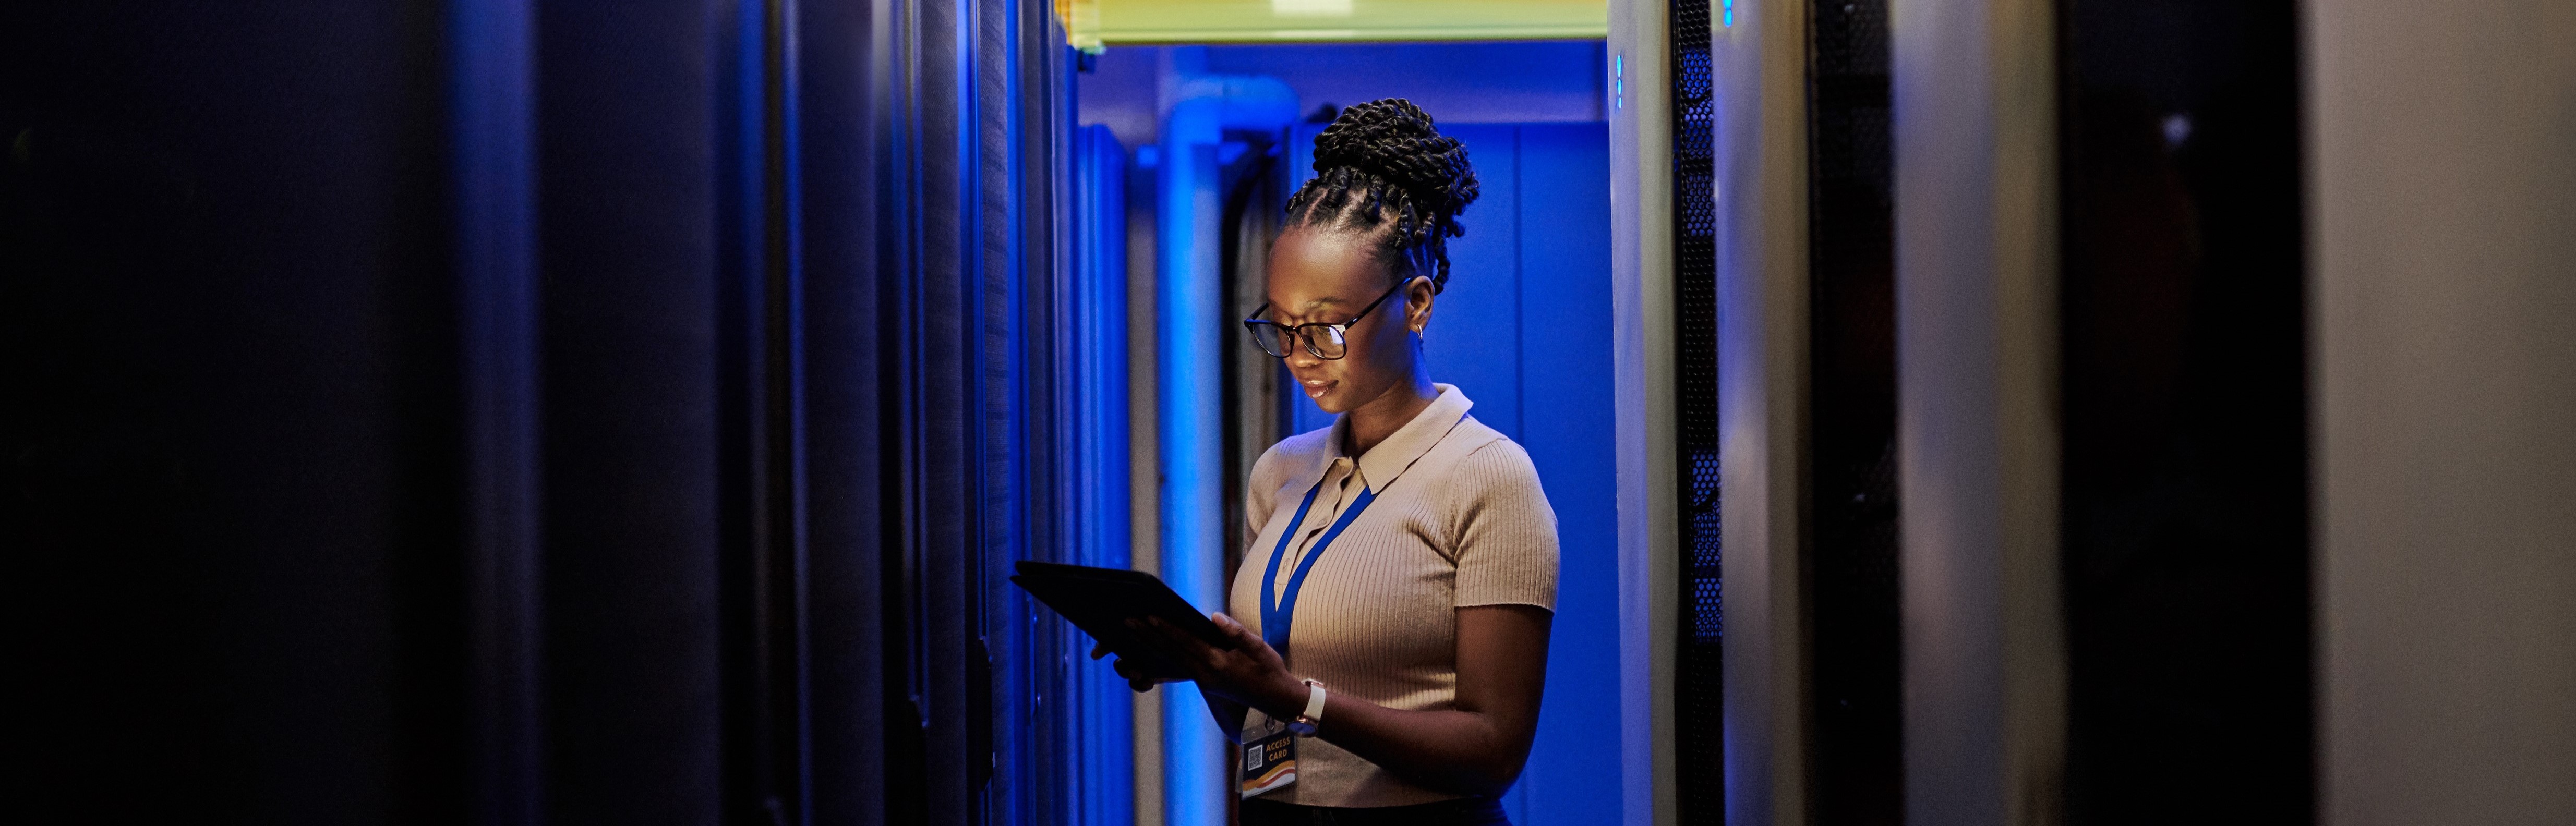 Cyber essentials - woman in data centre